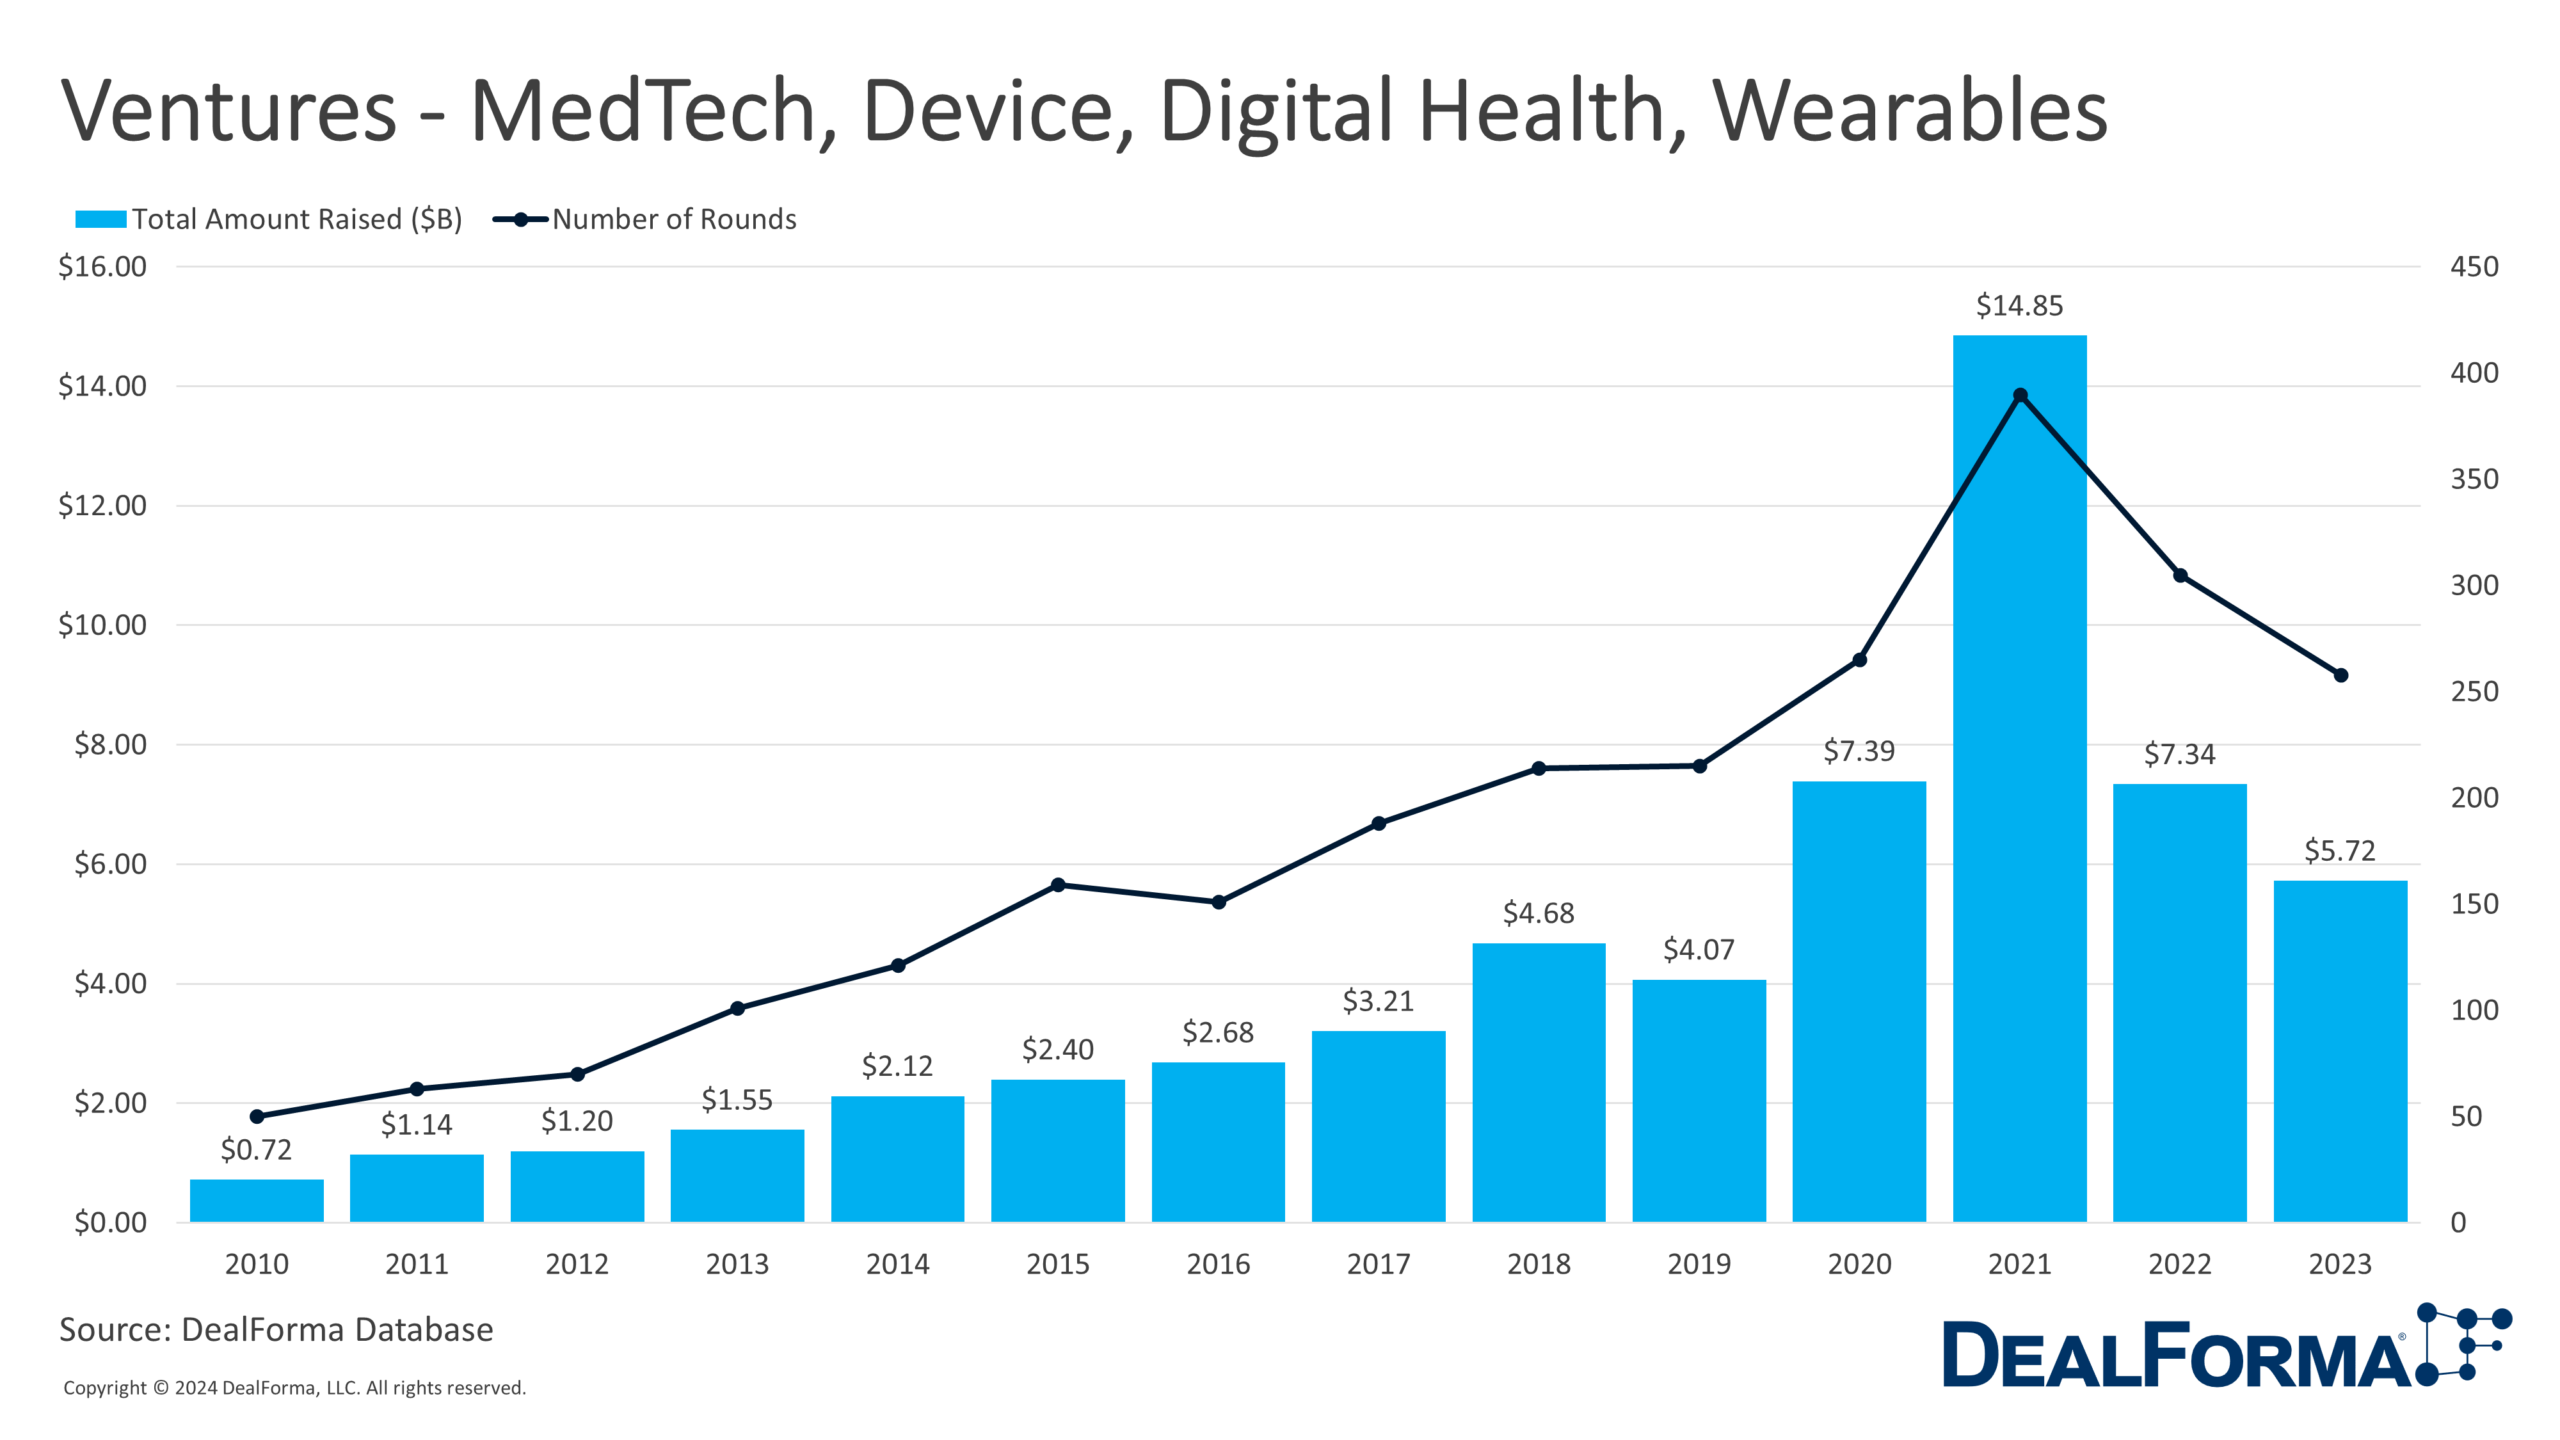 Ventures - MedTech, Device, Digital Health, Wearables